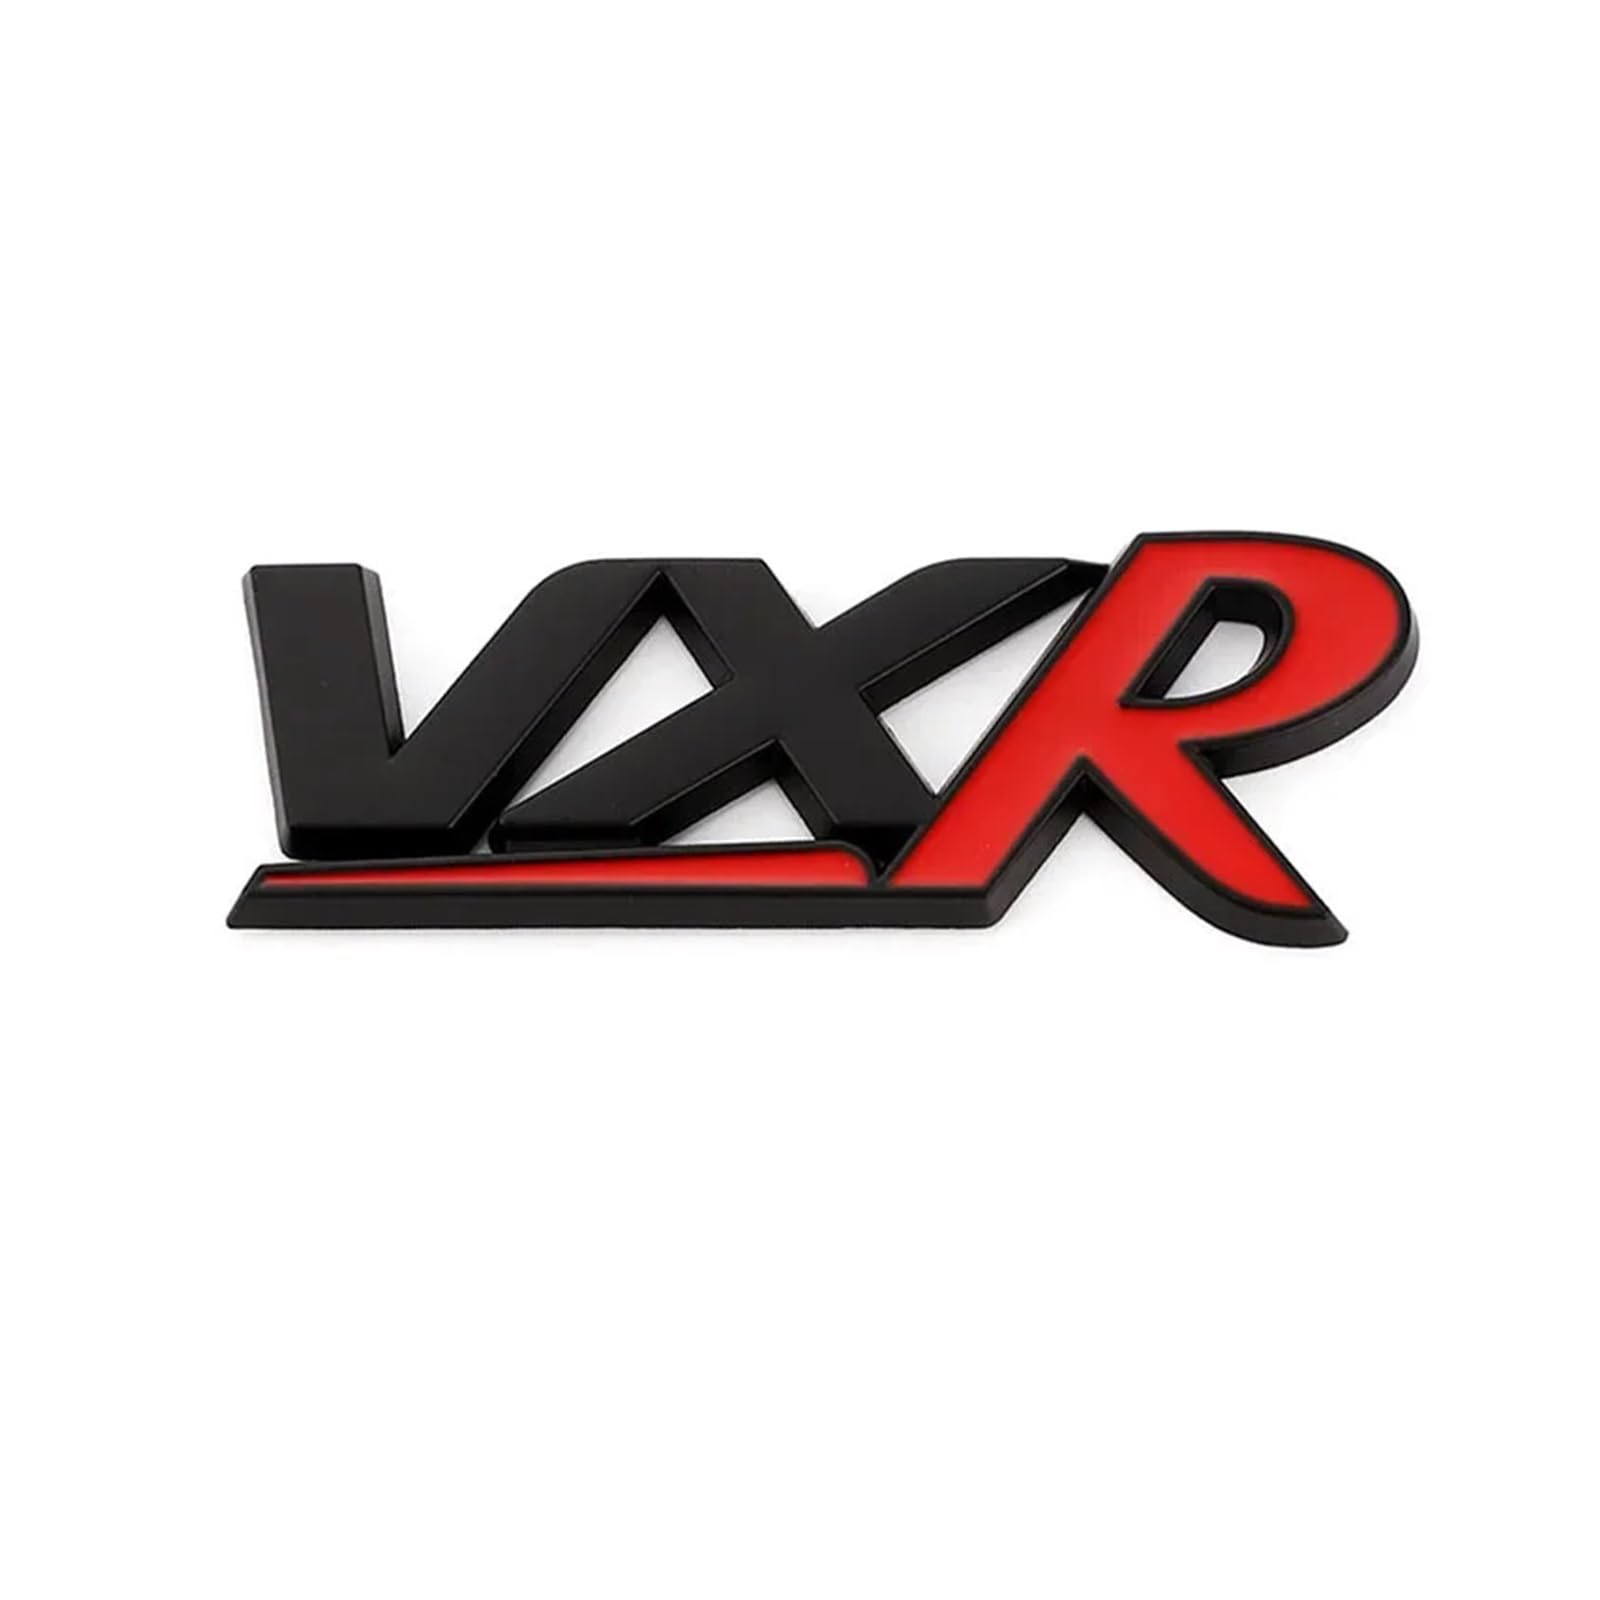 Aqxyju 3D-Metall-VXR-Logo, Auto-Frontgrill, Heckkofferraum-Emblem, Aufkleber, kompatibel mit Insignia Zafira Corsa D Astra HJ VXR Personalisierte Auto Aufkleber(Emblem sticker-03) von Aqxyju